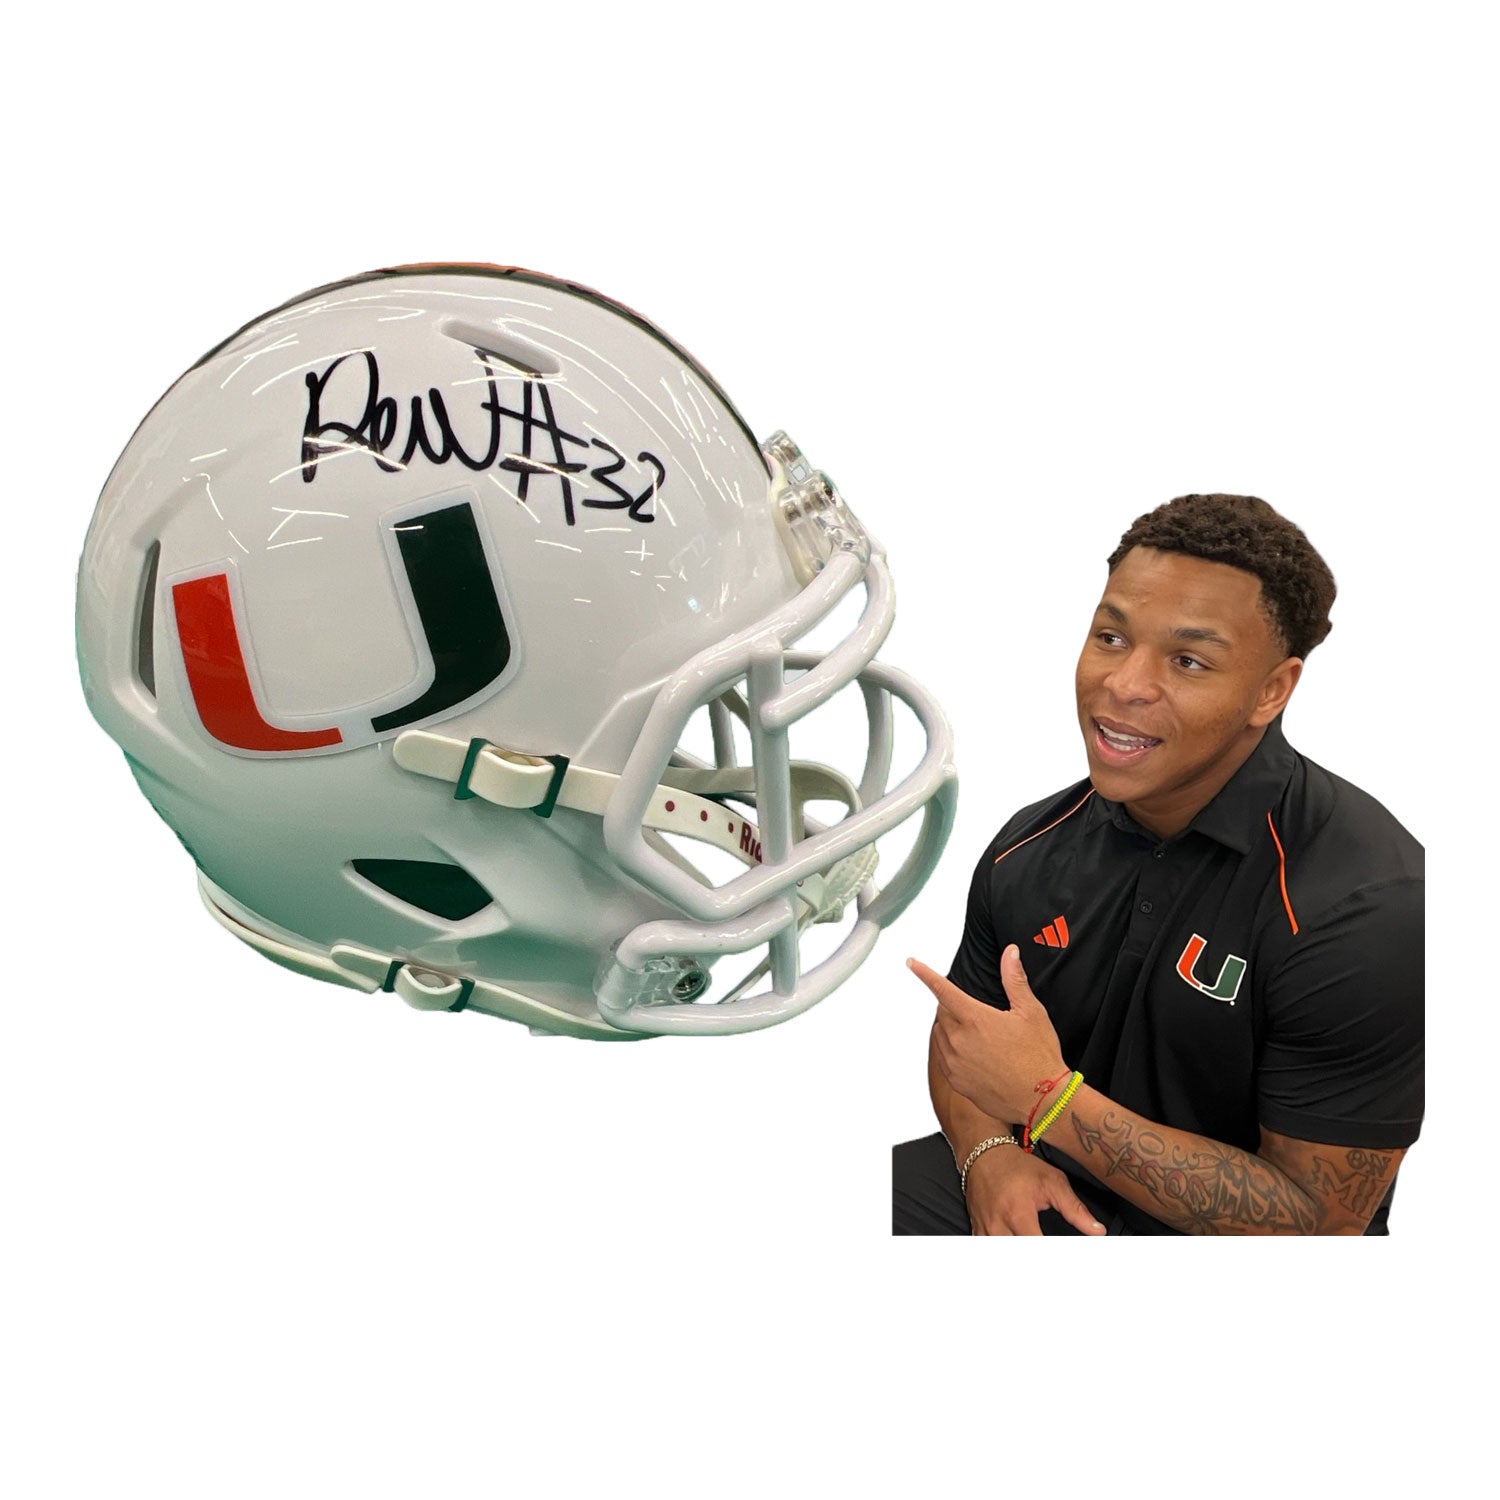 Miami Hurricanes Student Athlete #32 Raul Aguirre, Jr. Mini Football Helmet - Main View